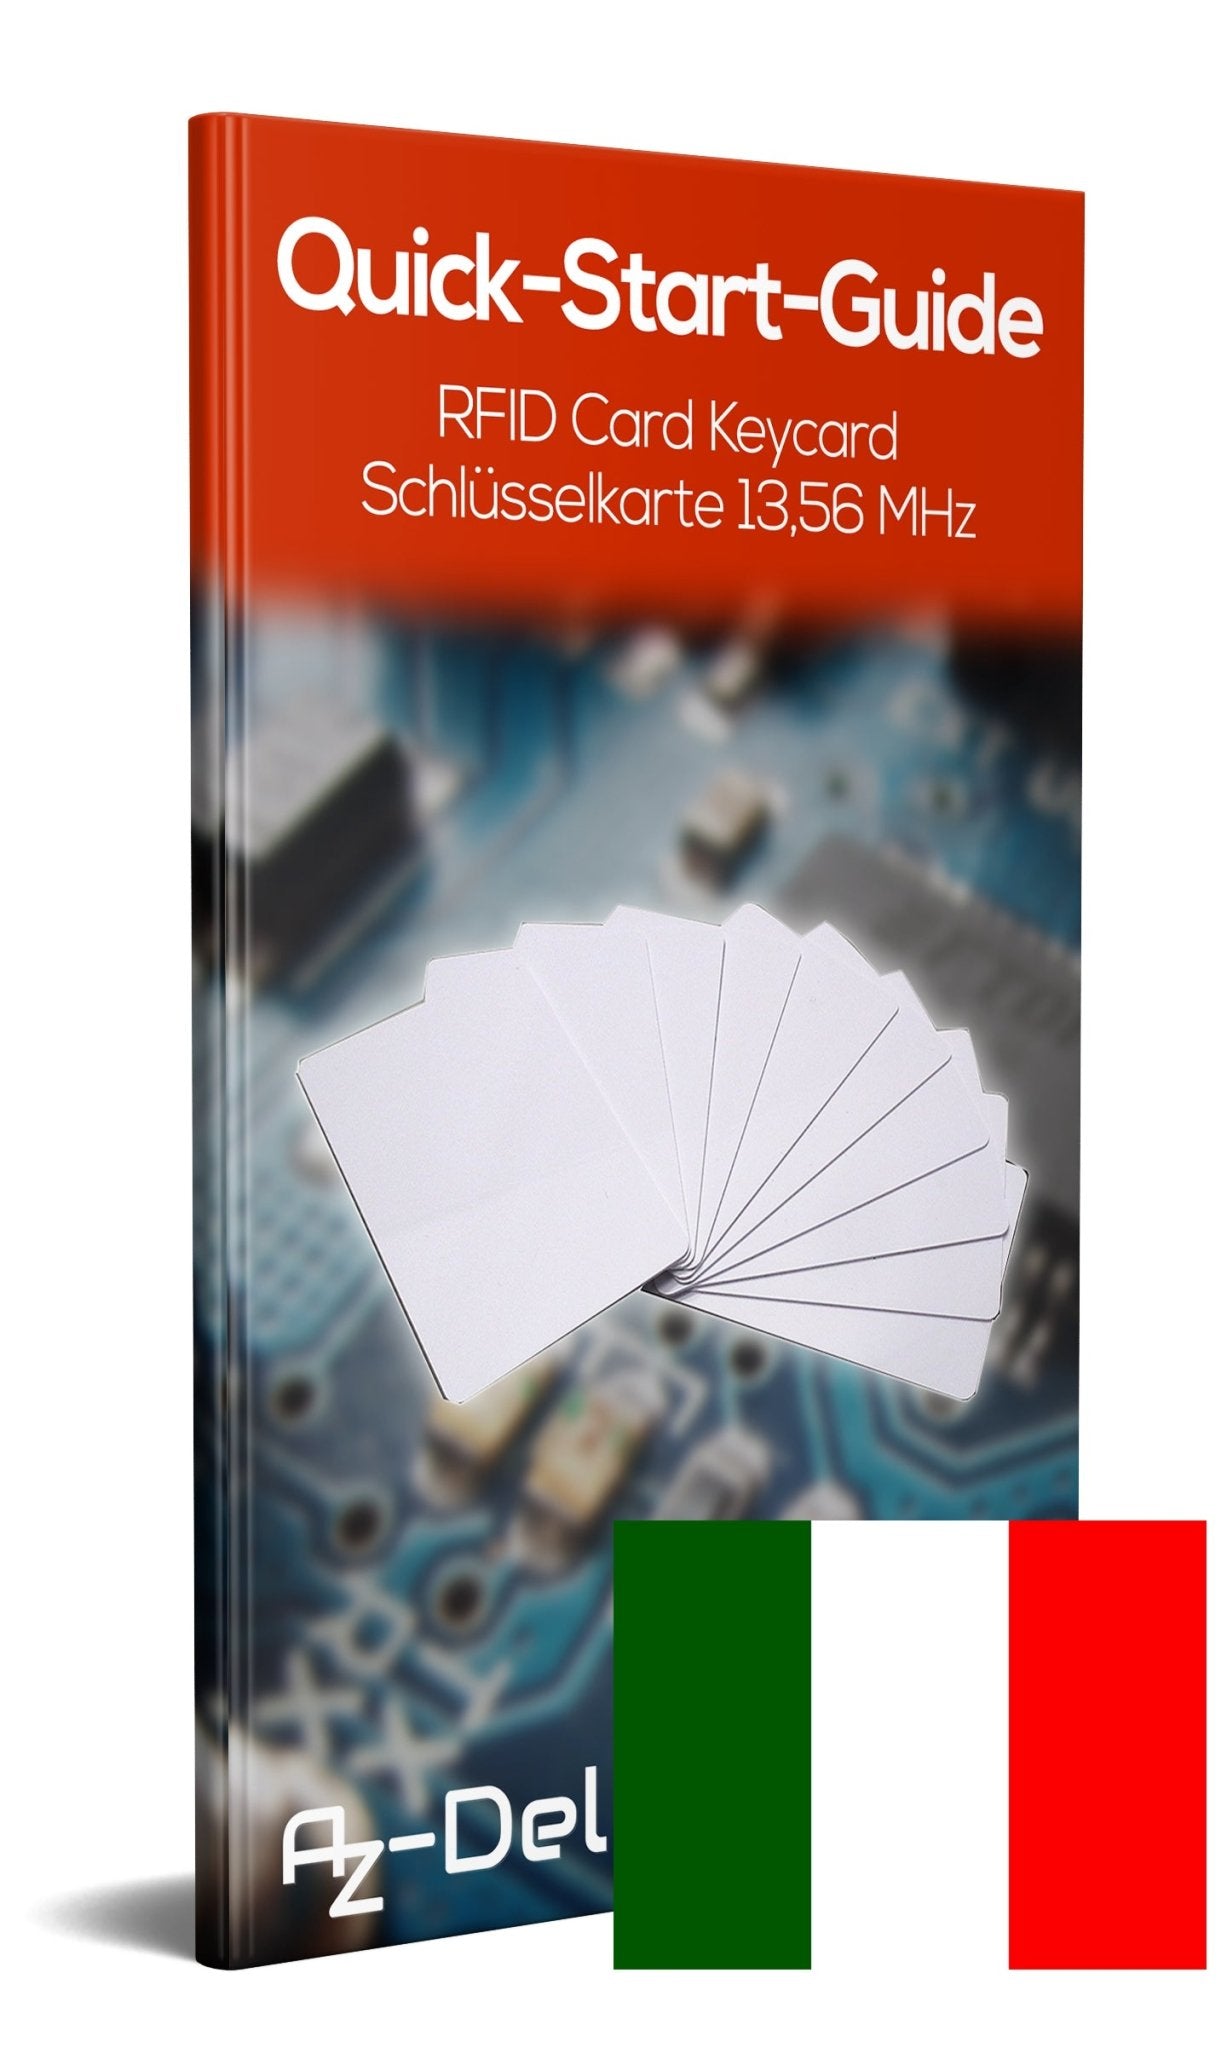 RFID Keycard Card 13,56MHz Schlüsselkarte Karte MF S50 (13,56 MHz) - AZ-Delivery